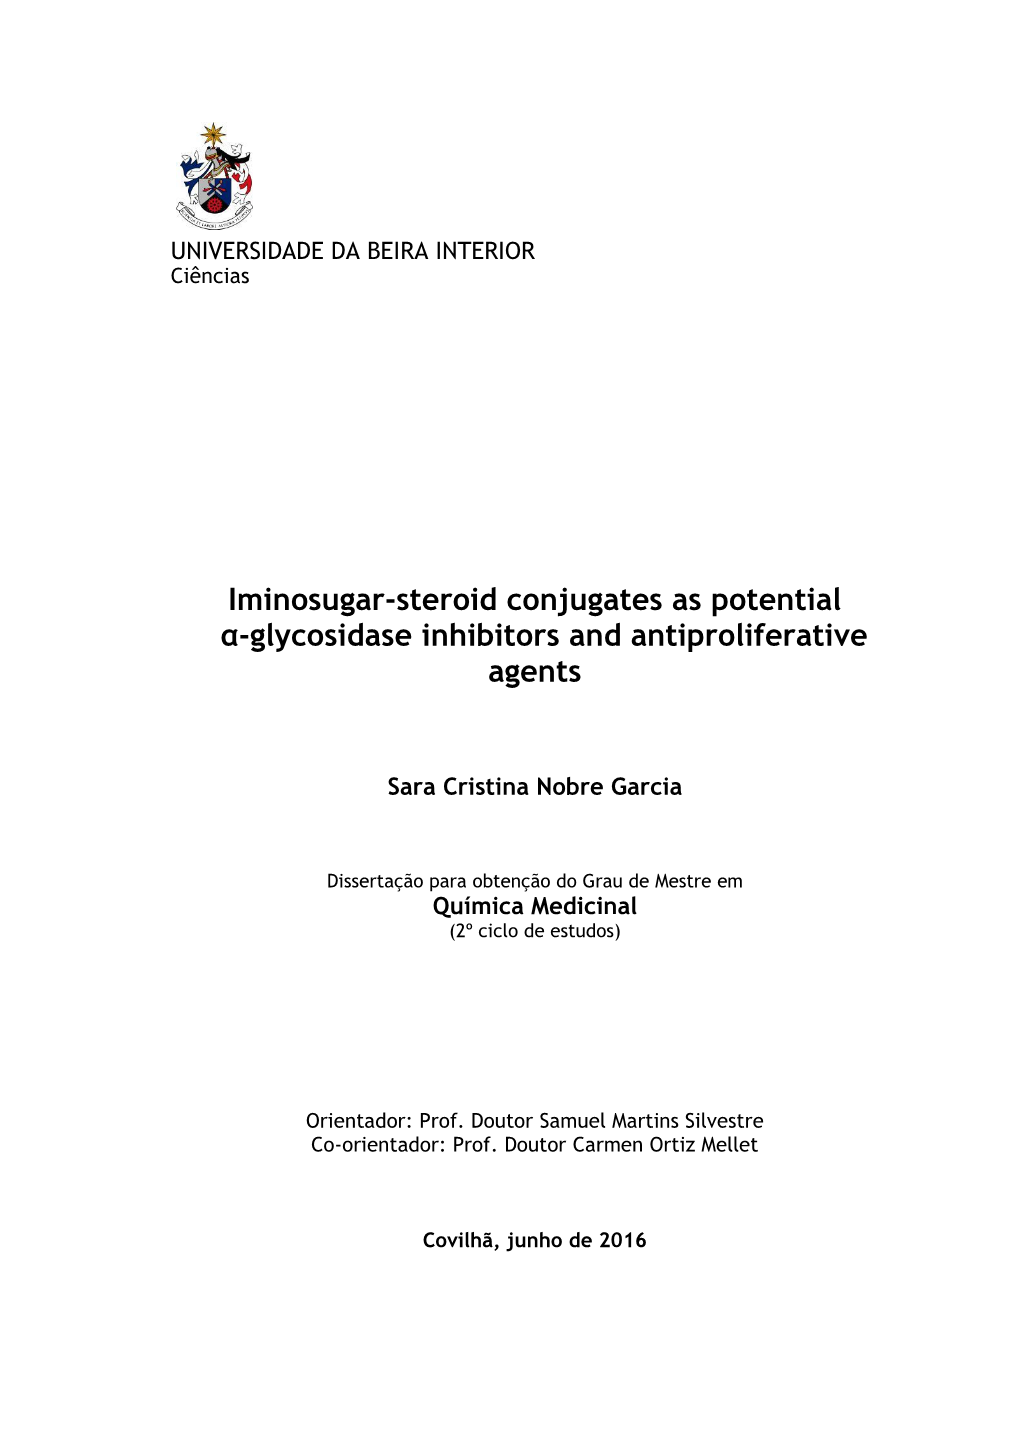 Iminosugar-Steroid Conjugates As Potential Α-Glycosidase Inhibitors and Antiproliferative Agents